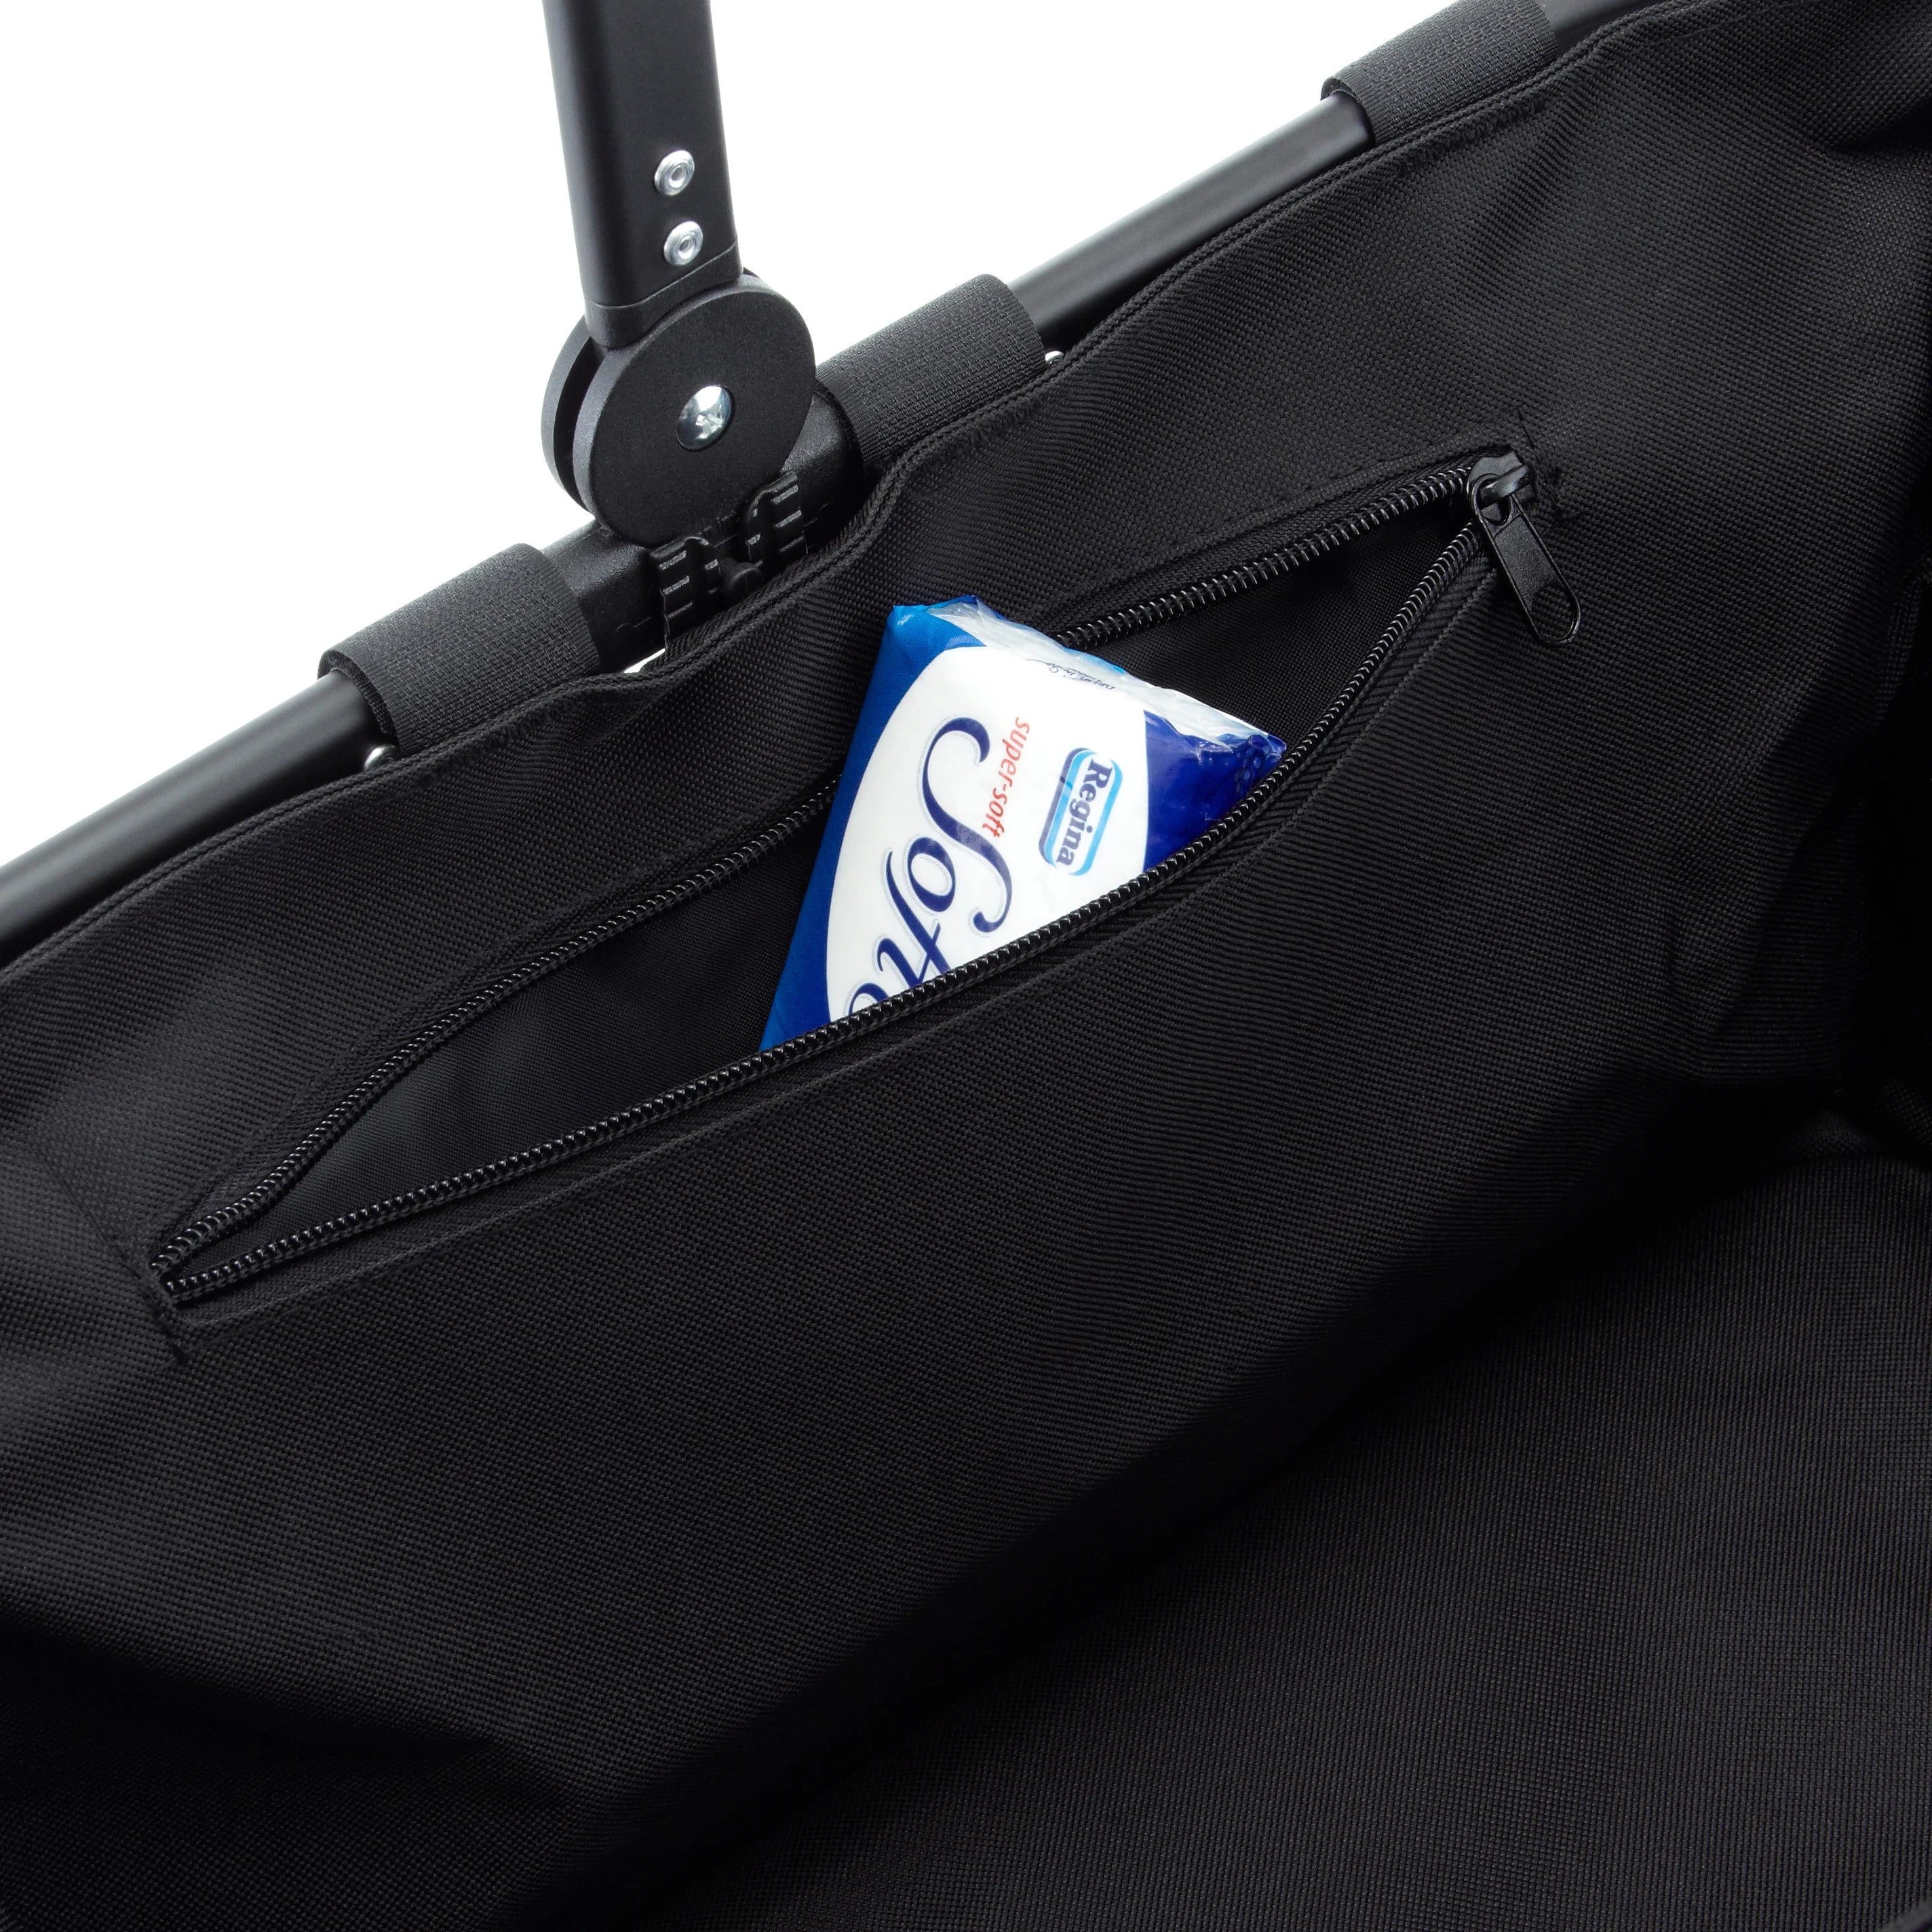 Reisenthel Shopping Carrybag Frame panier à provisions 48 cm - noir/noir